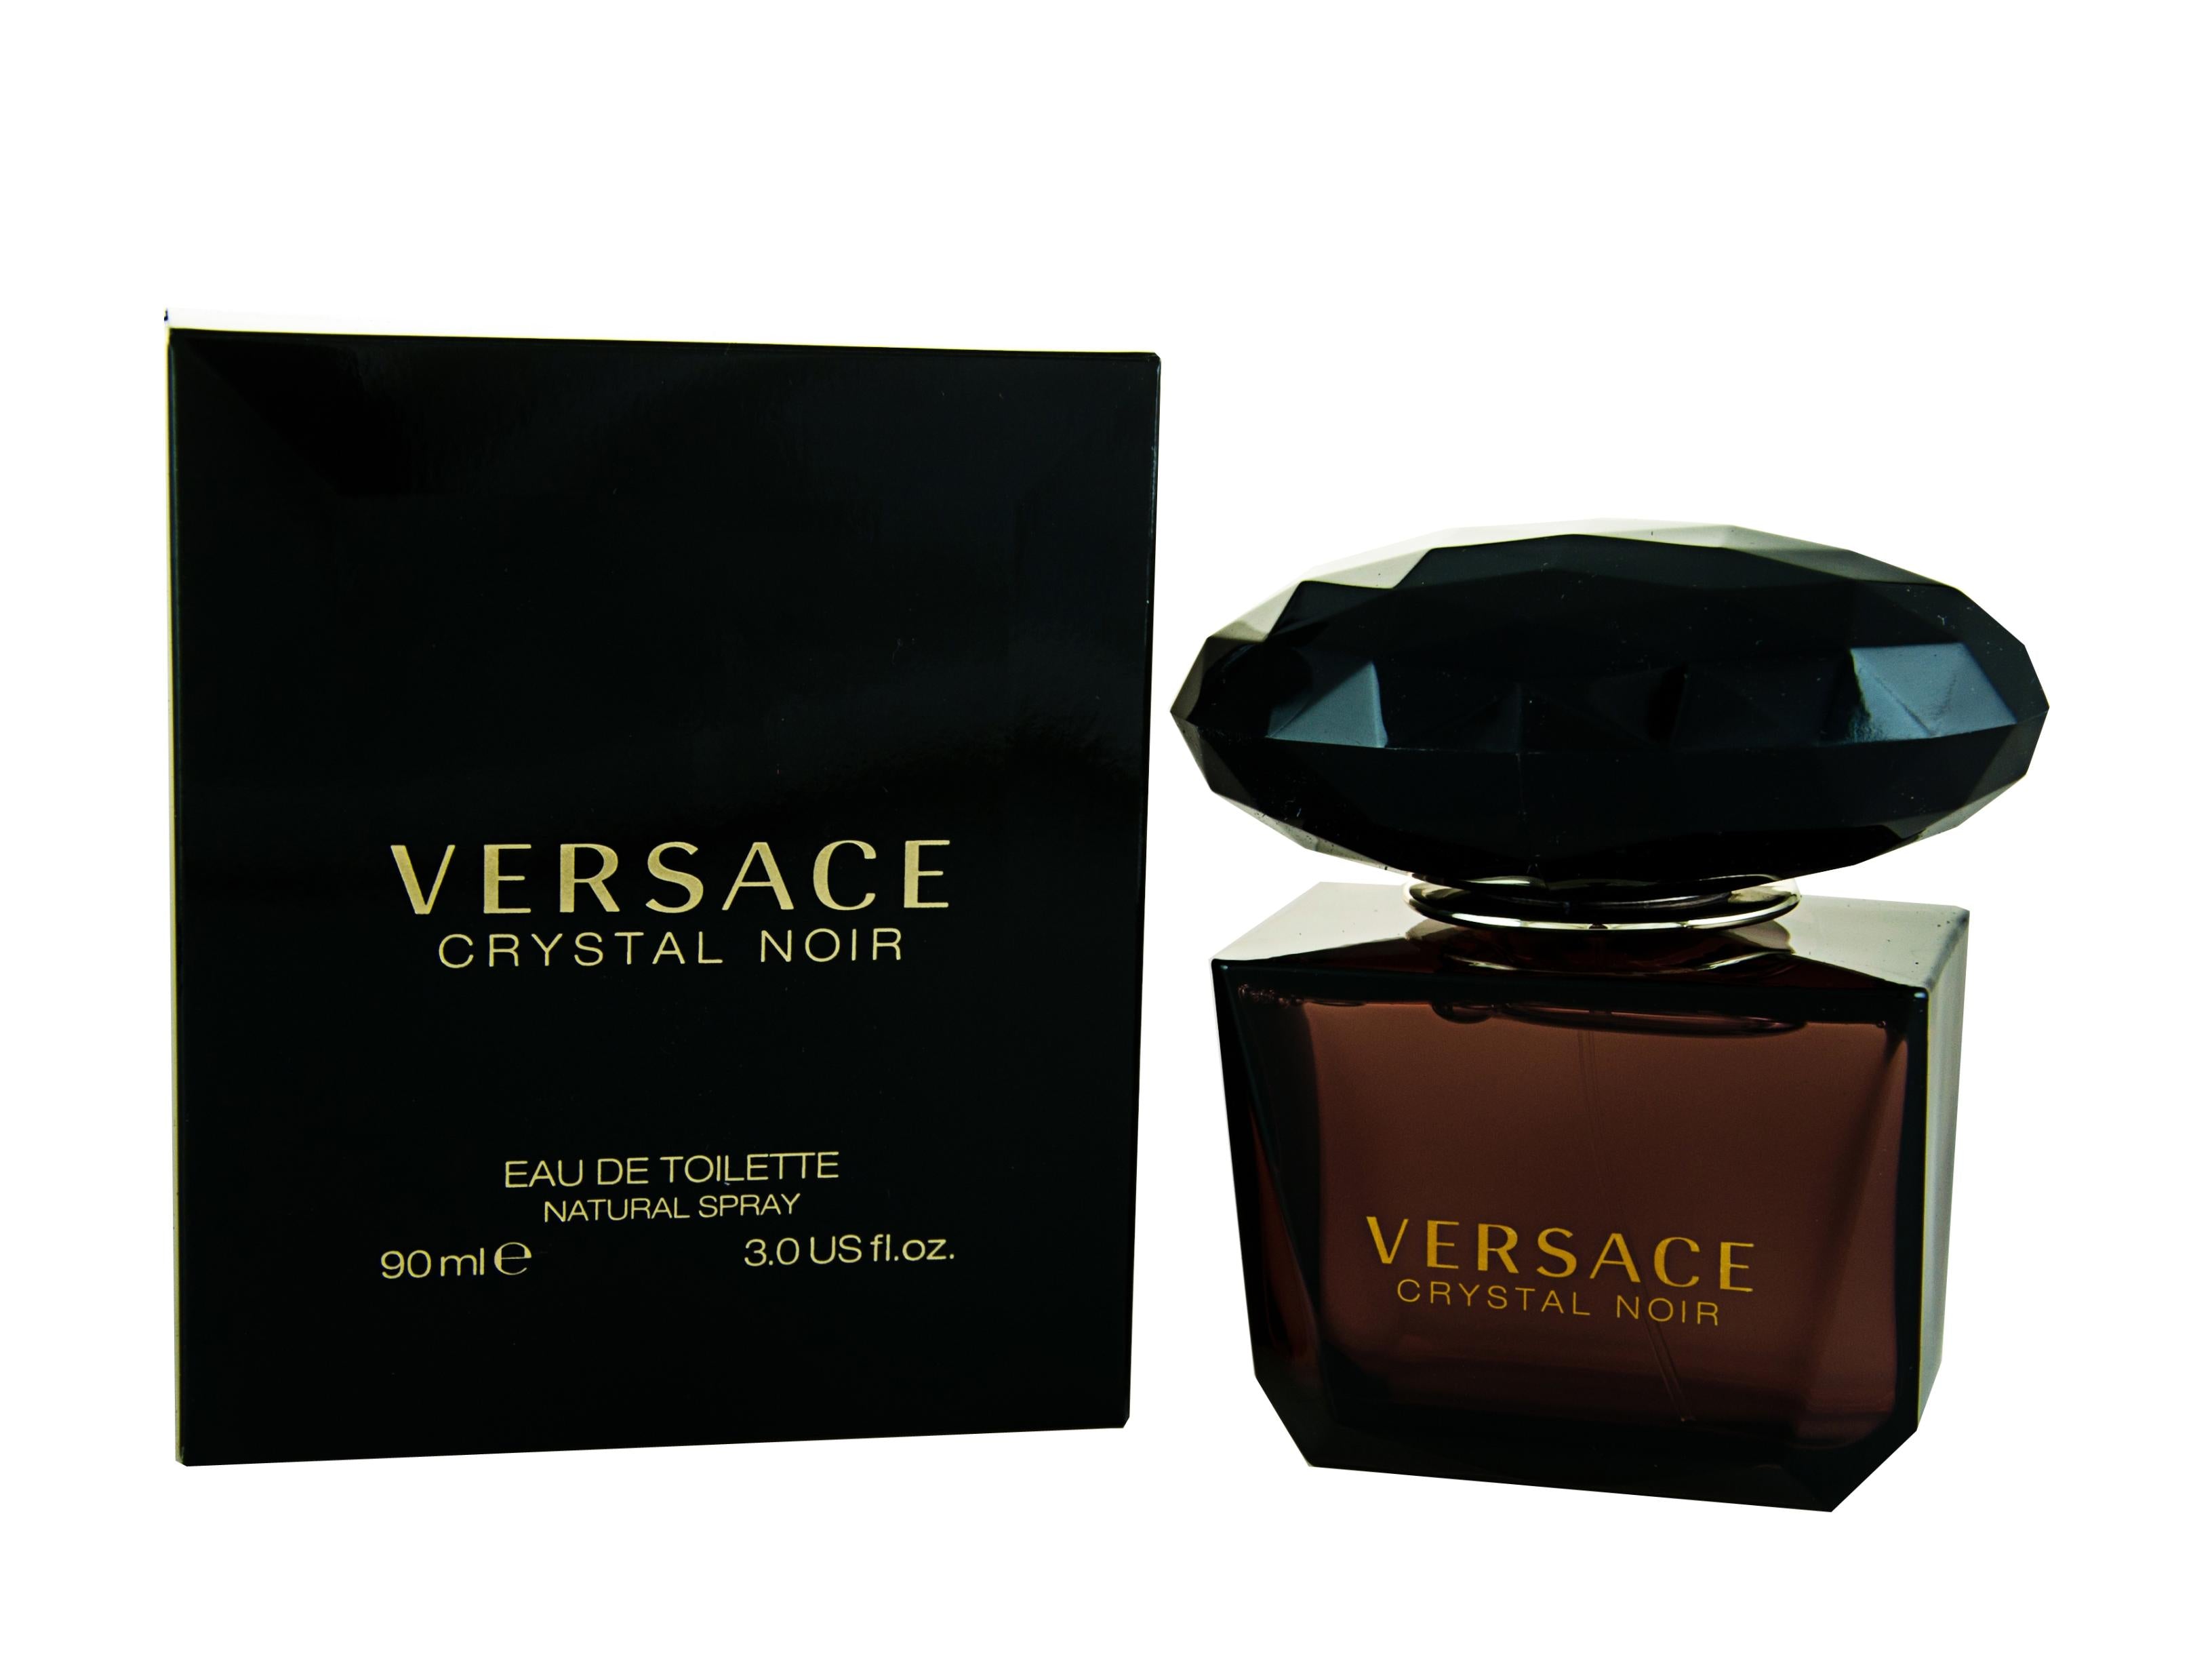 View Versace Crystal Noir Eau de Toilette 90ml Spray information